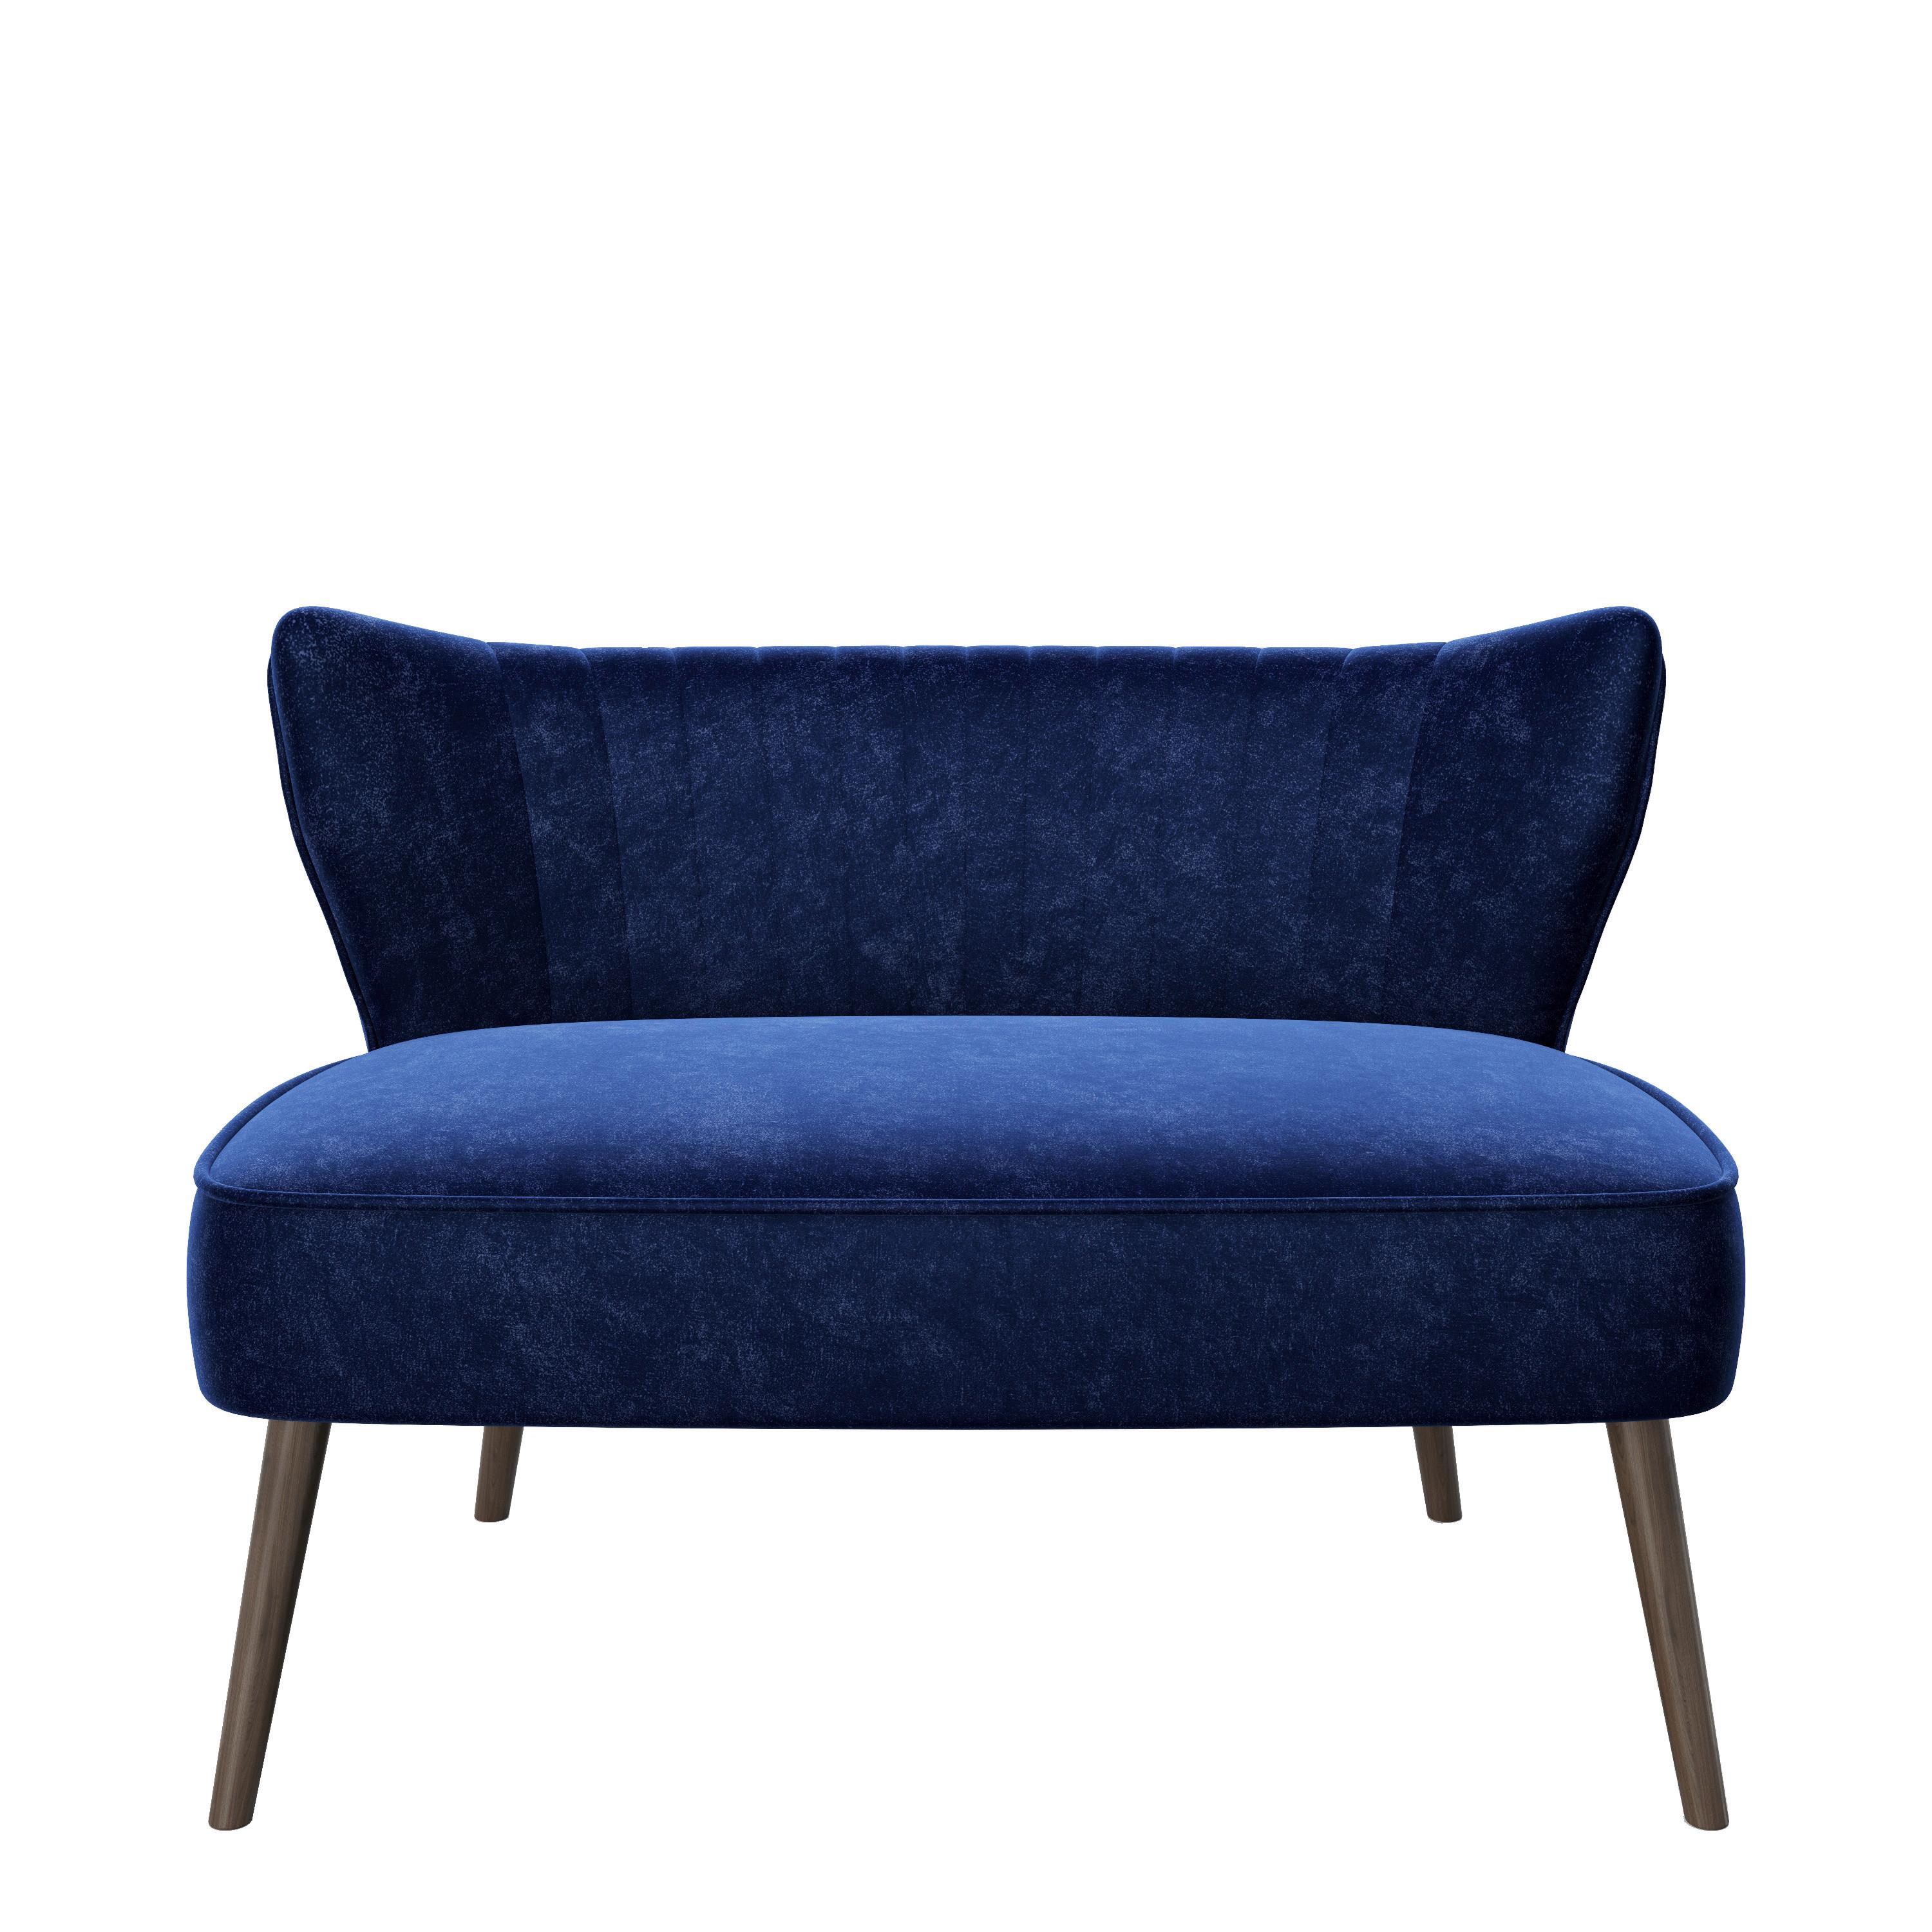 2-Sitzer-Sofa Kelly Blau Vintage-Style - Blau/Walnussfarben, KONVENTIONELL, Textil (112/76/73cm) - Playboy